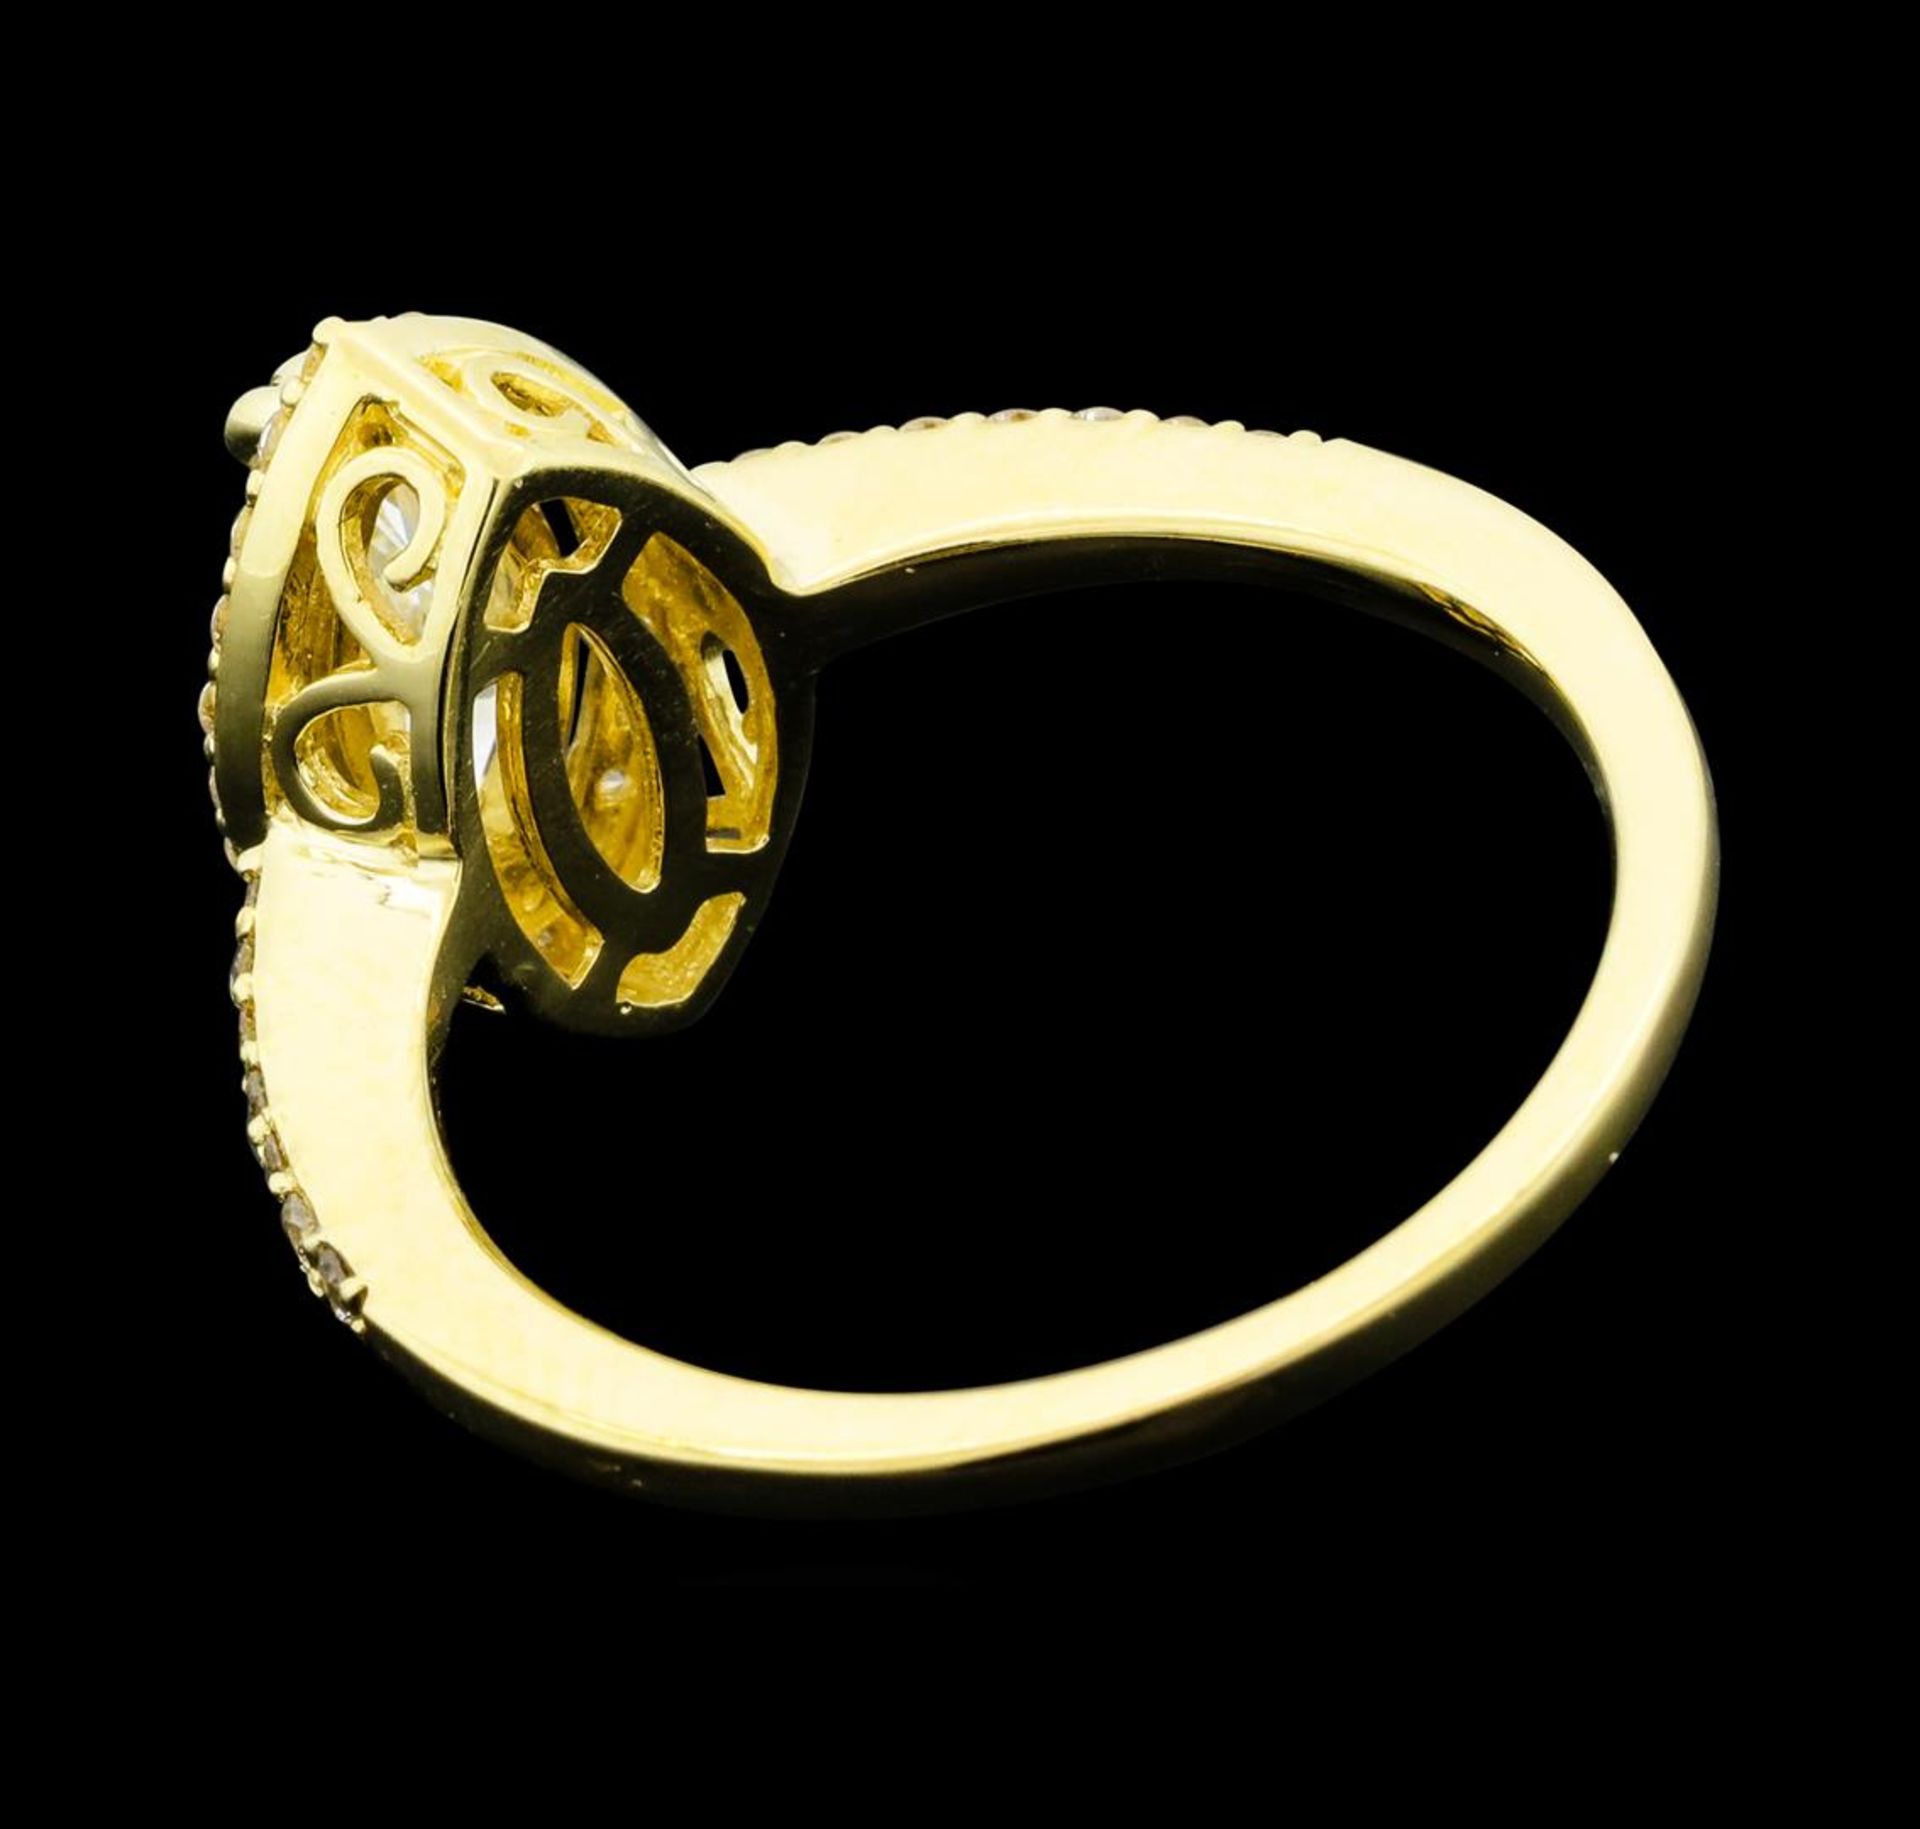 1.16 ctw Diamond Ring - 14KT Yellow Gold - Image 3 of 5